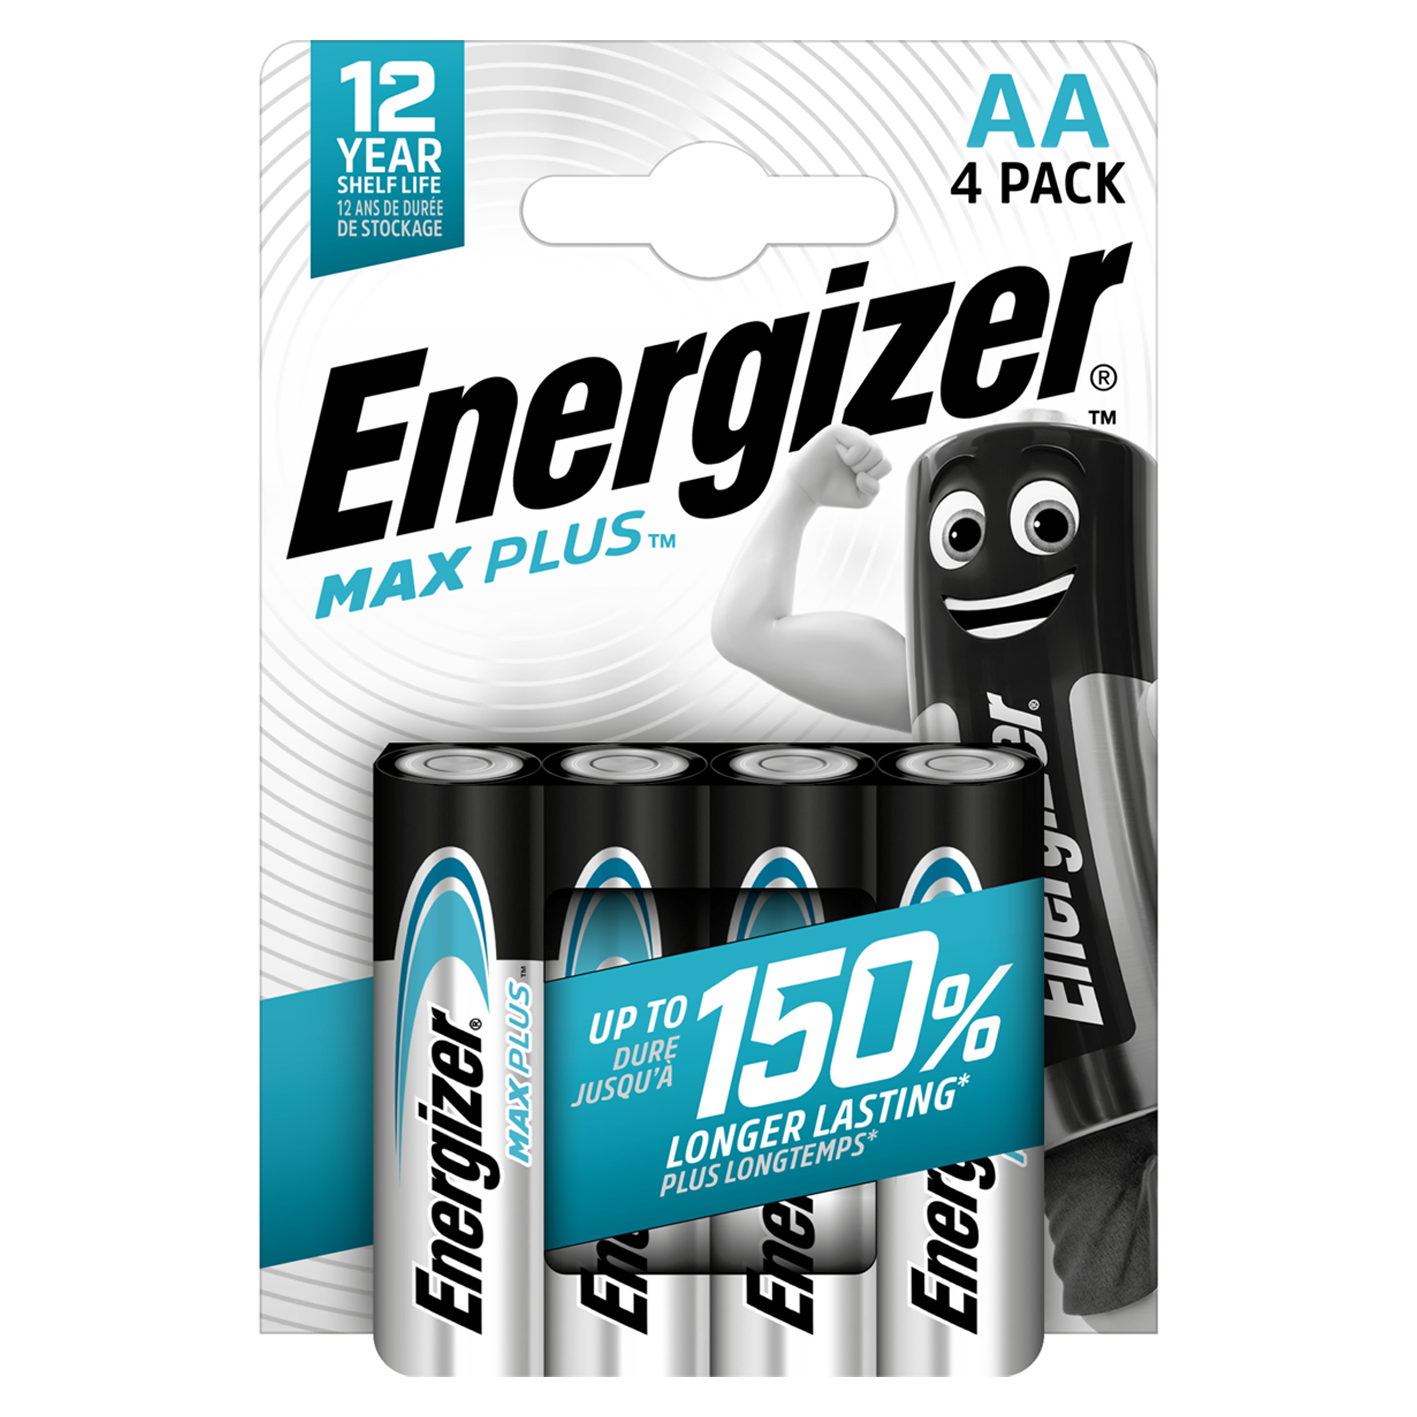 Energizer® AA Max Plus alcalino, paquete de 4